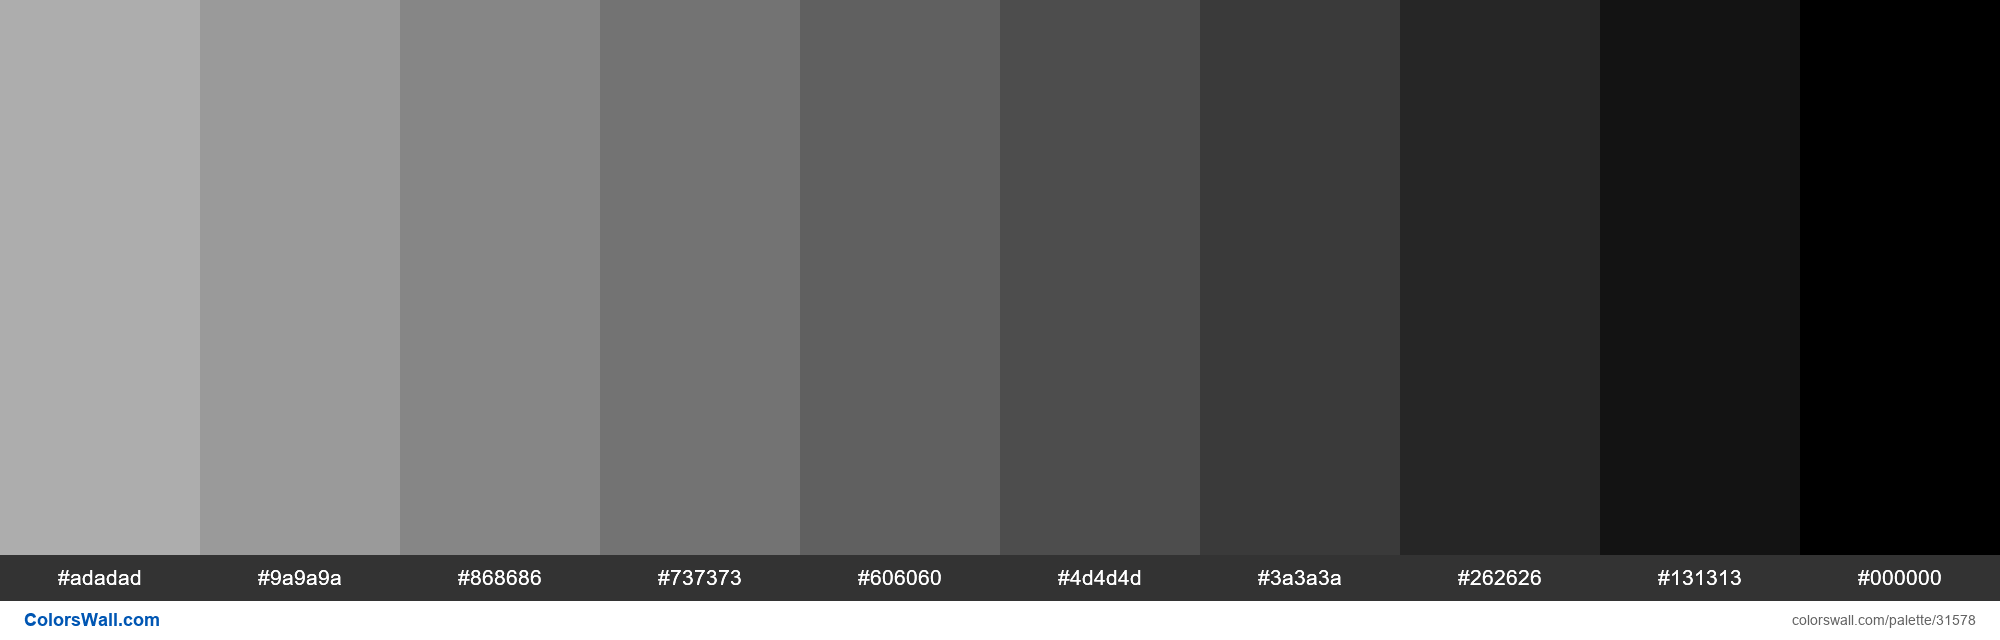 Shades X11 color Silver #C0C0C0 hex - ColorsWall